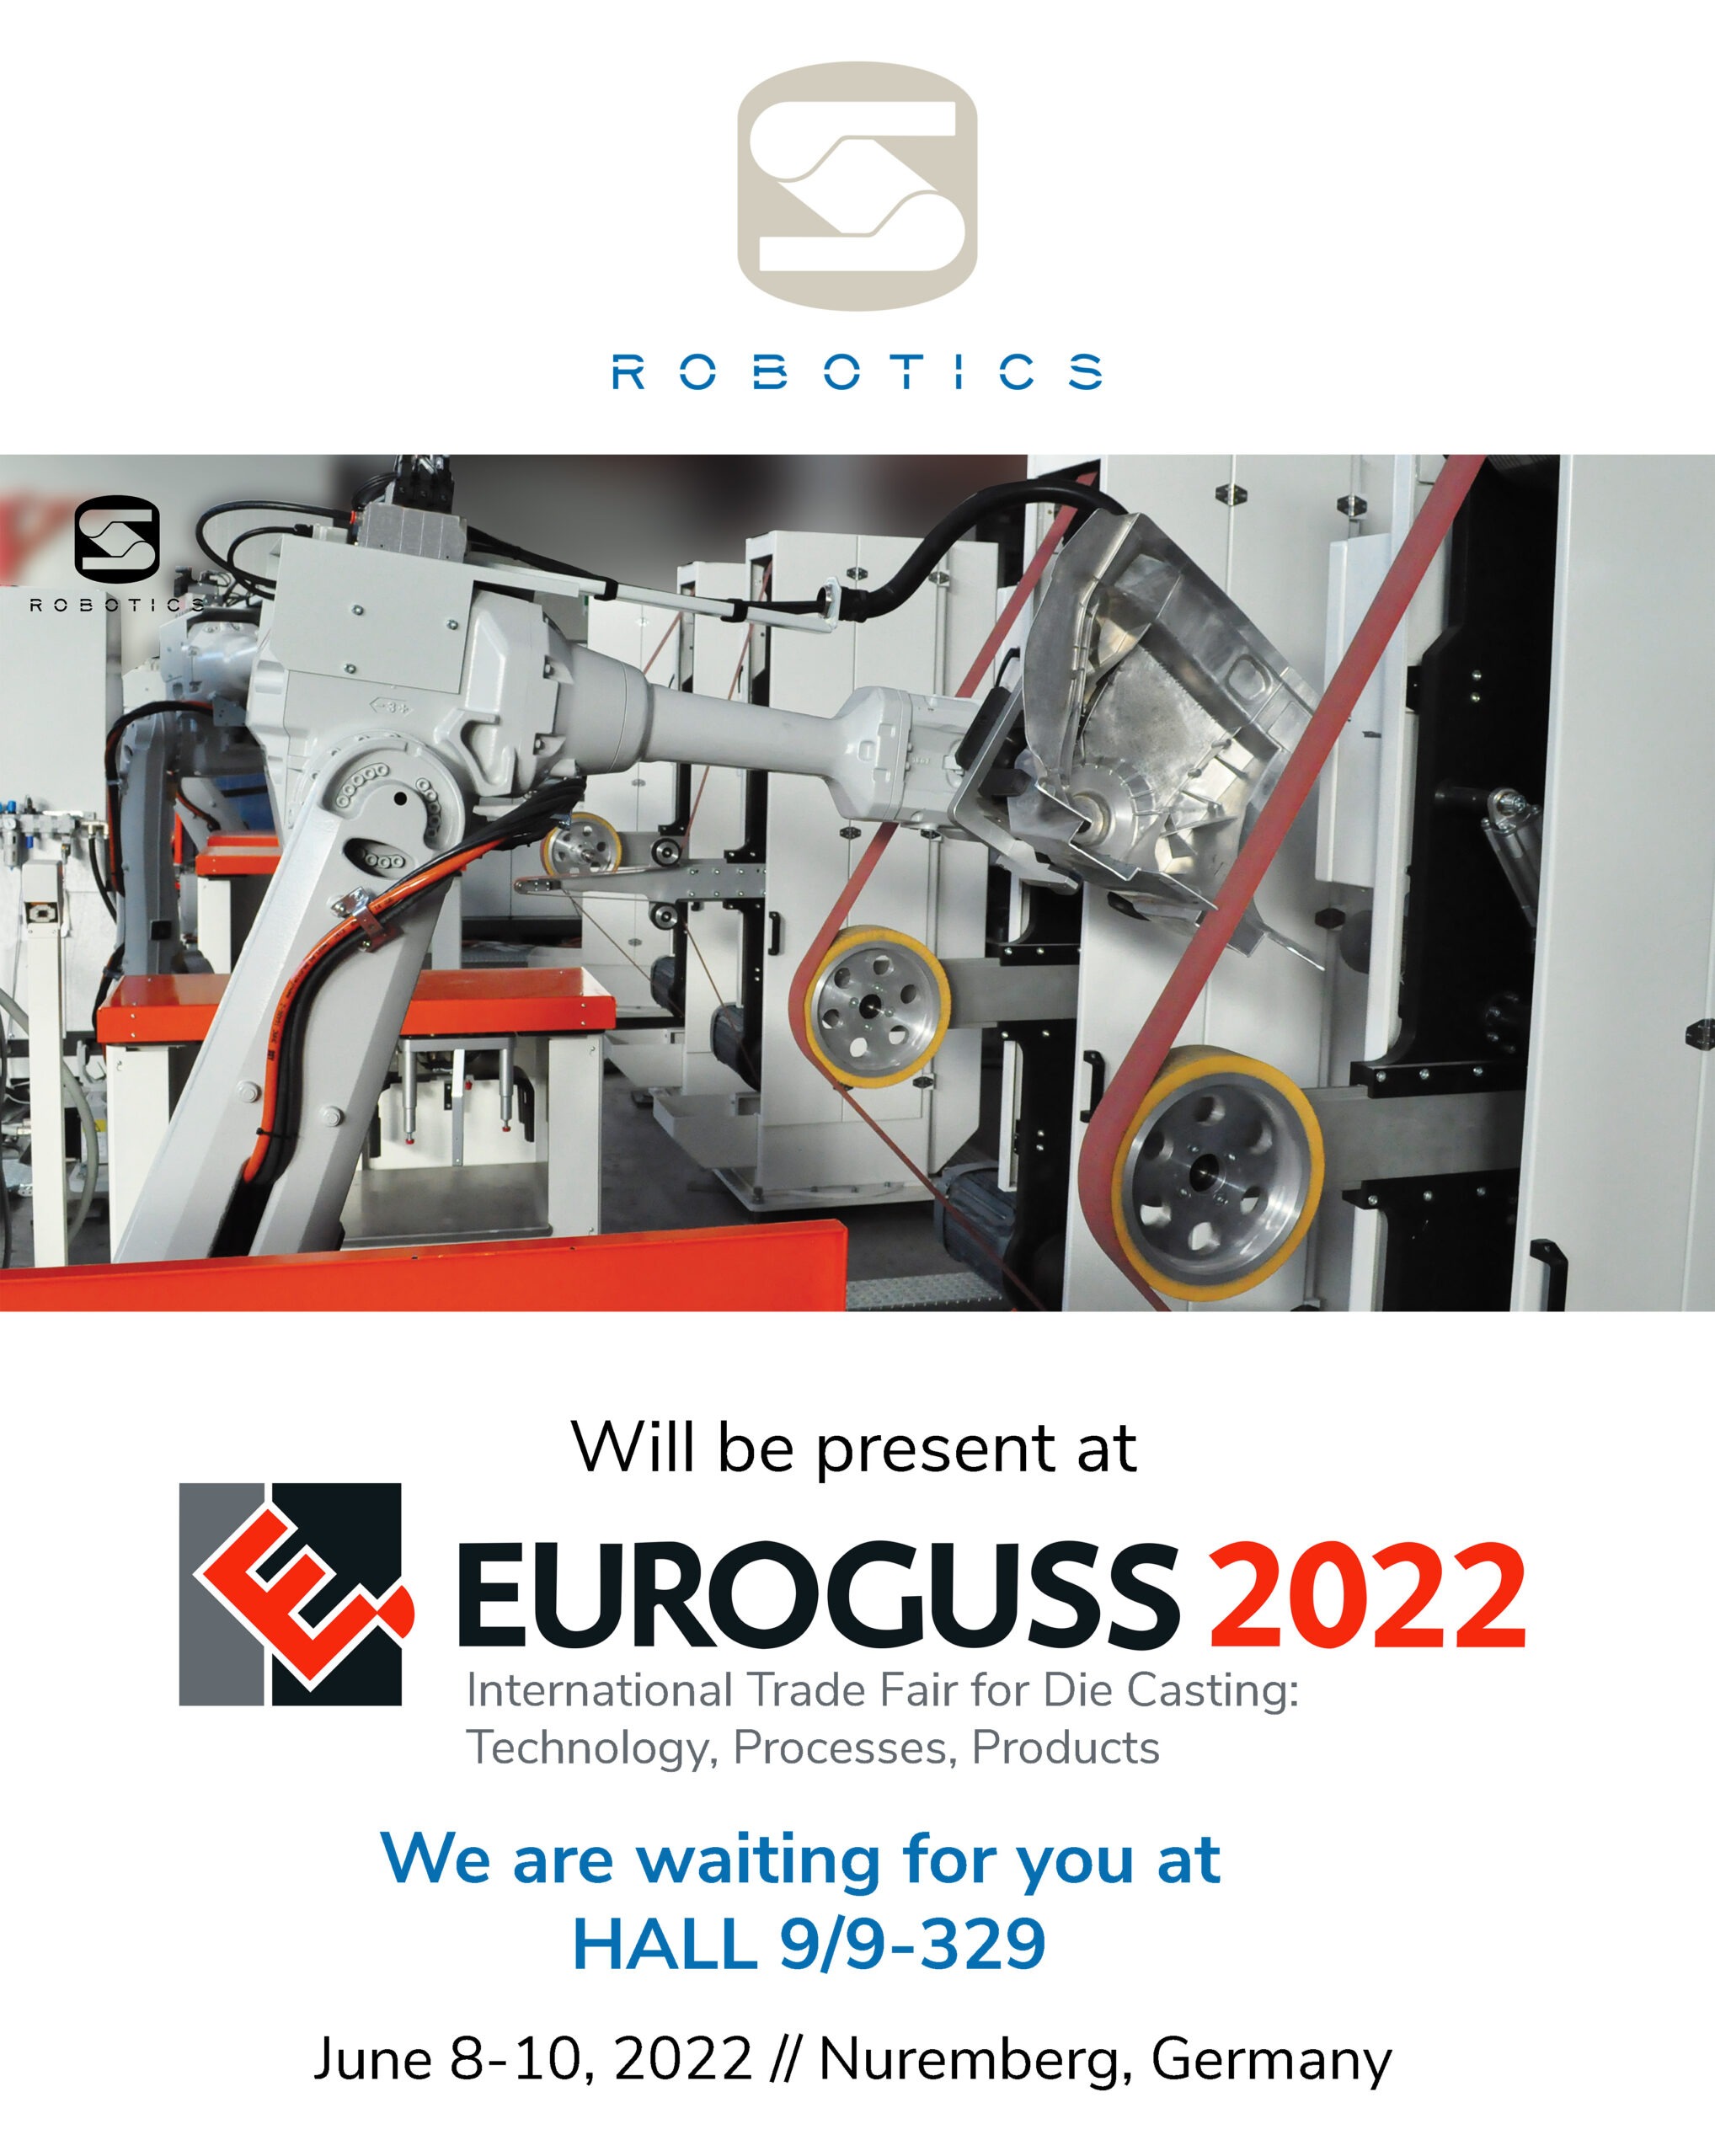 Sir Robotics EuroGuss 2022 Nuremberg